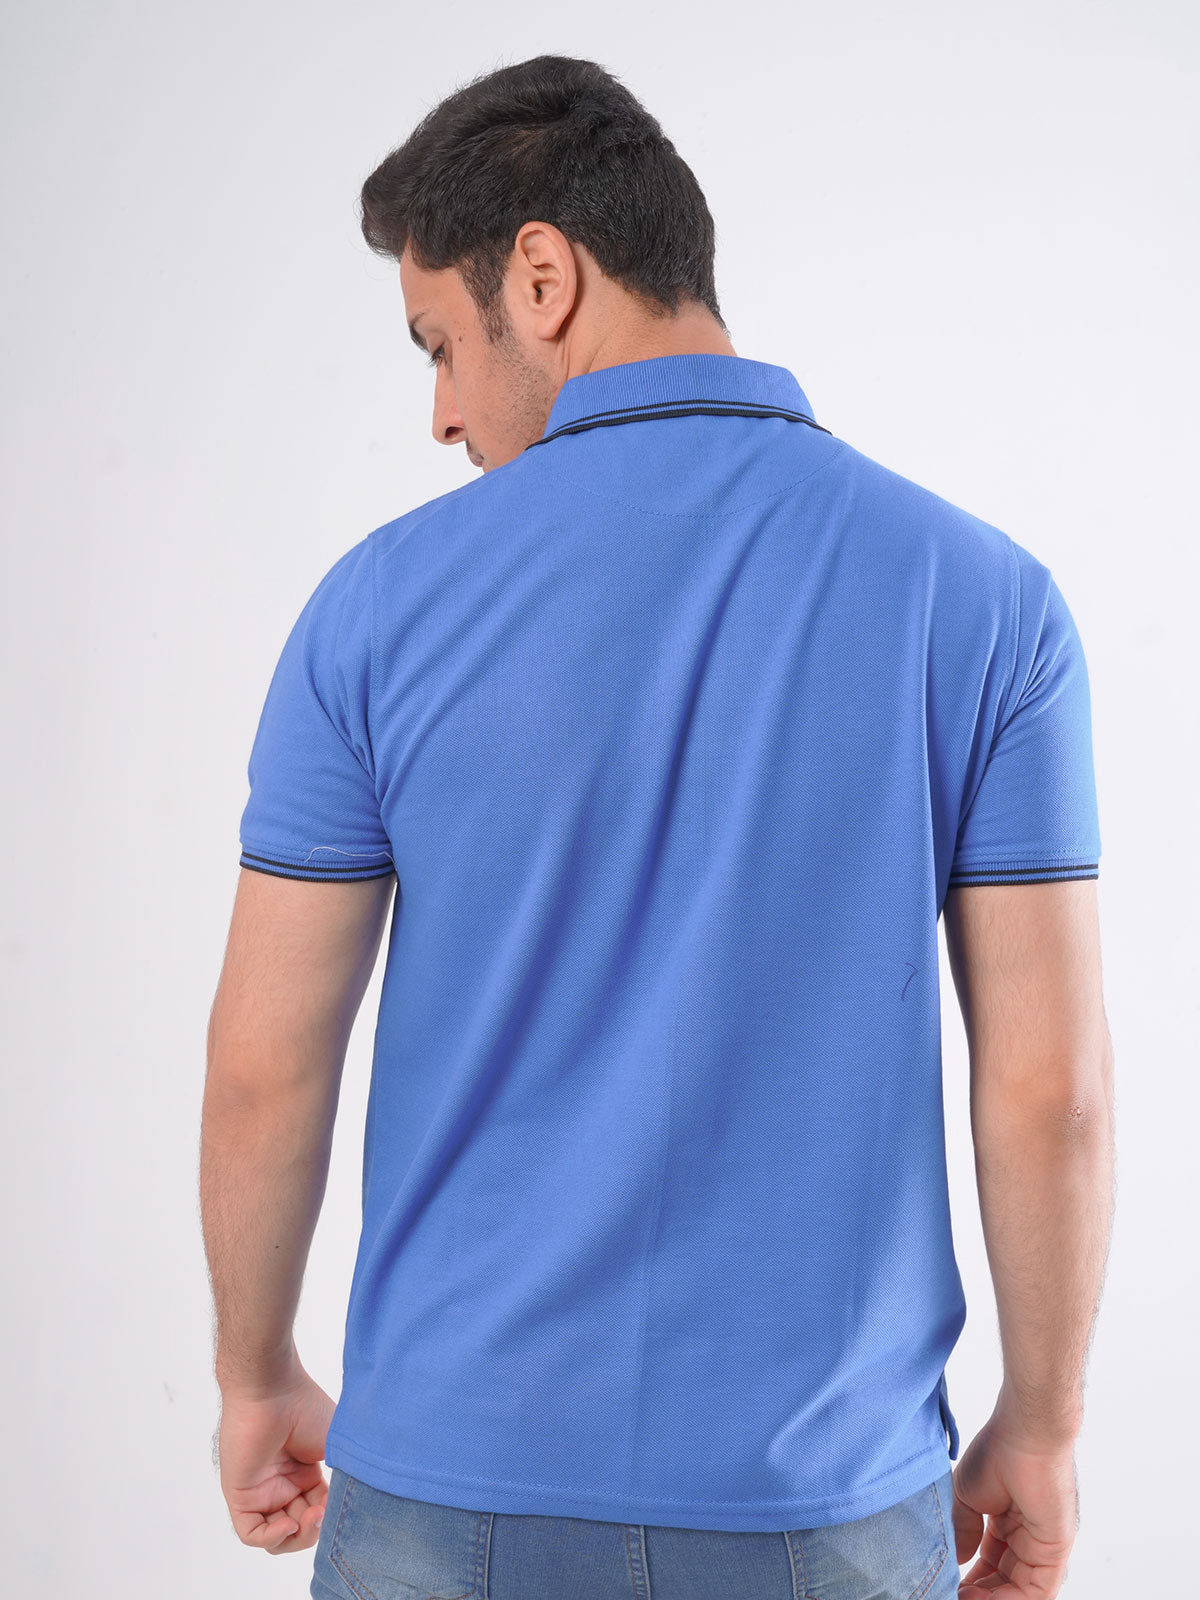 Light Blue Plain Contrast Tipping Half Sleeves Polo T-Shirt (POLO-583)